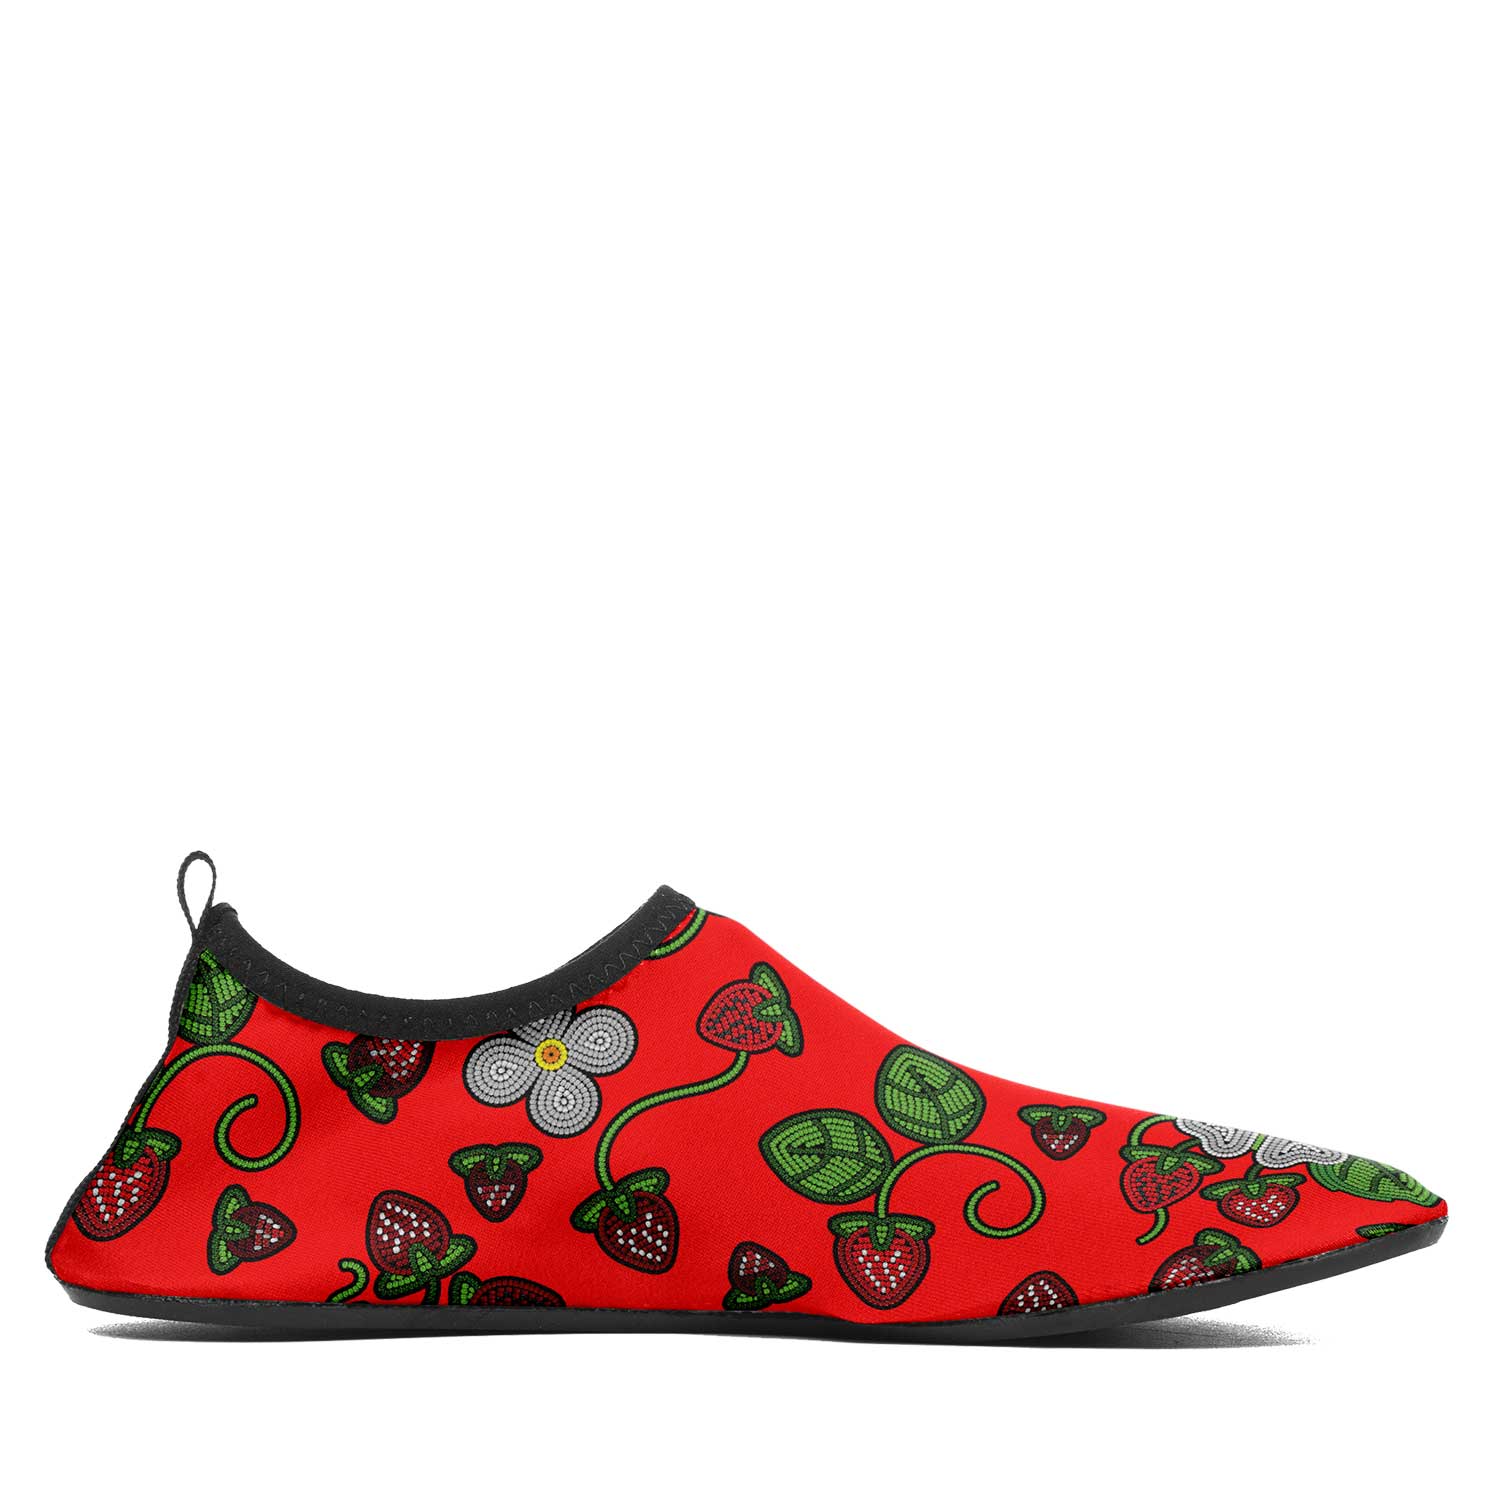 Strawberry Dreams Fire Kid's Sockamoccs Slip On Shoes